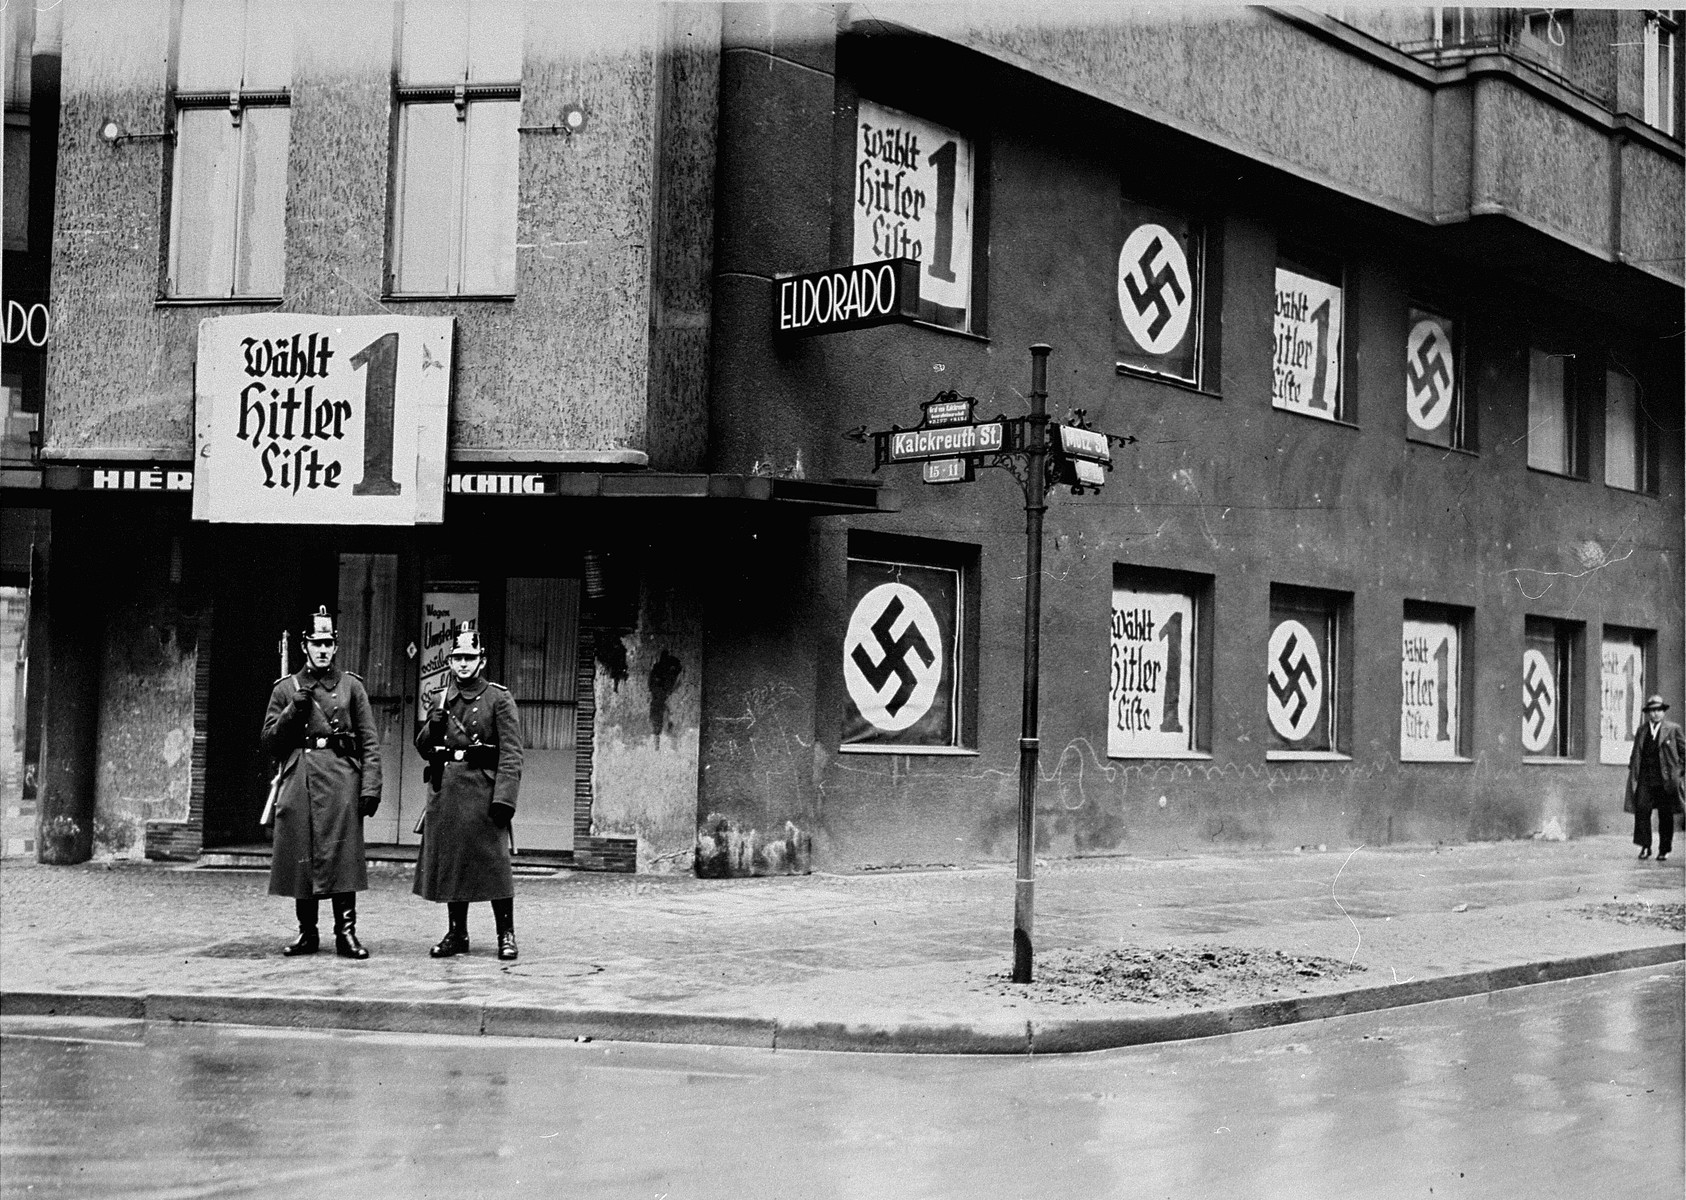 Eldorado in Berlin after Hitler's rise to power